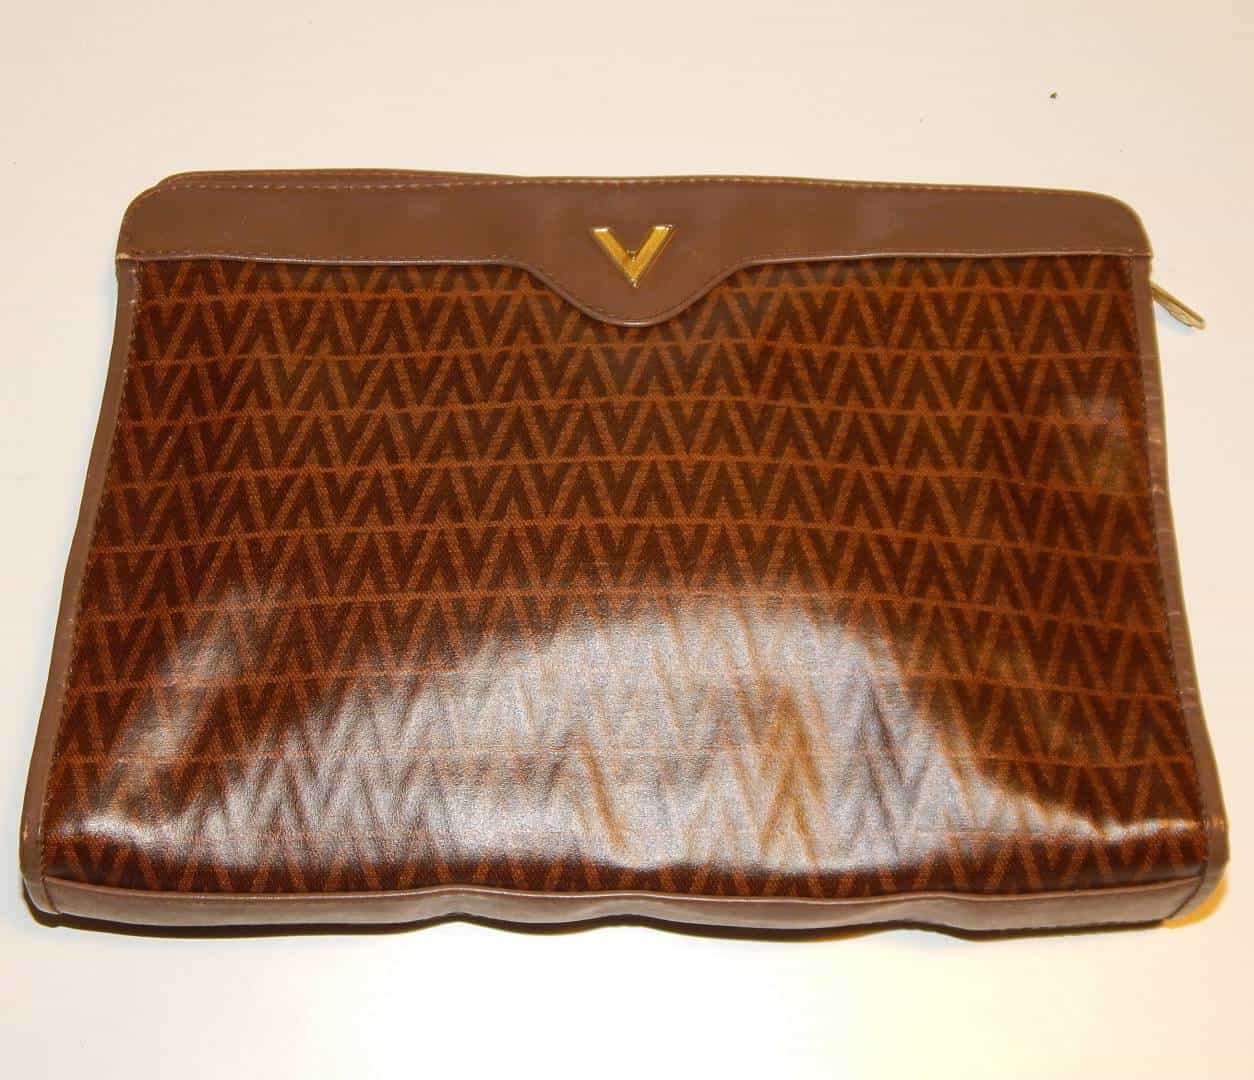 Mario Valentino Italy Original clutch bag - Bags & Wallets for